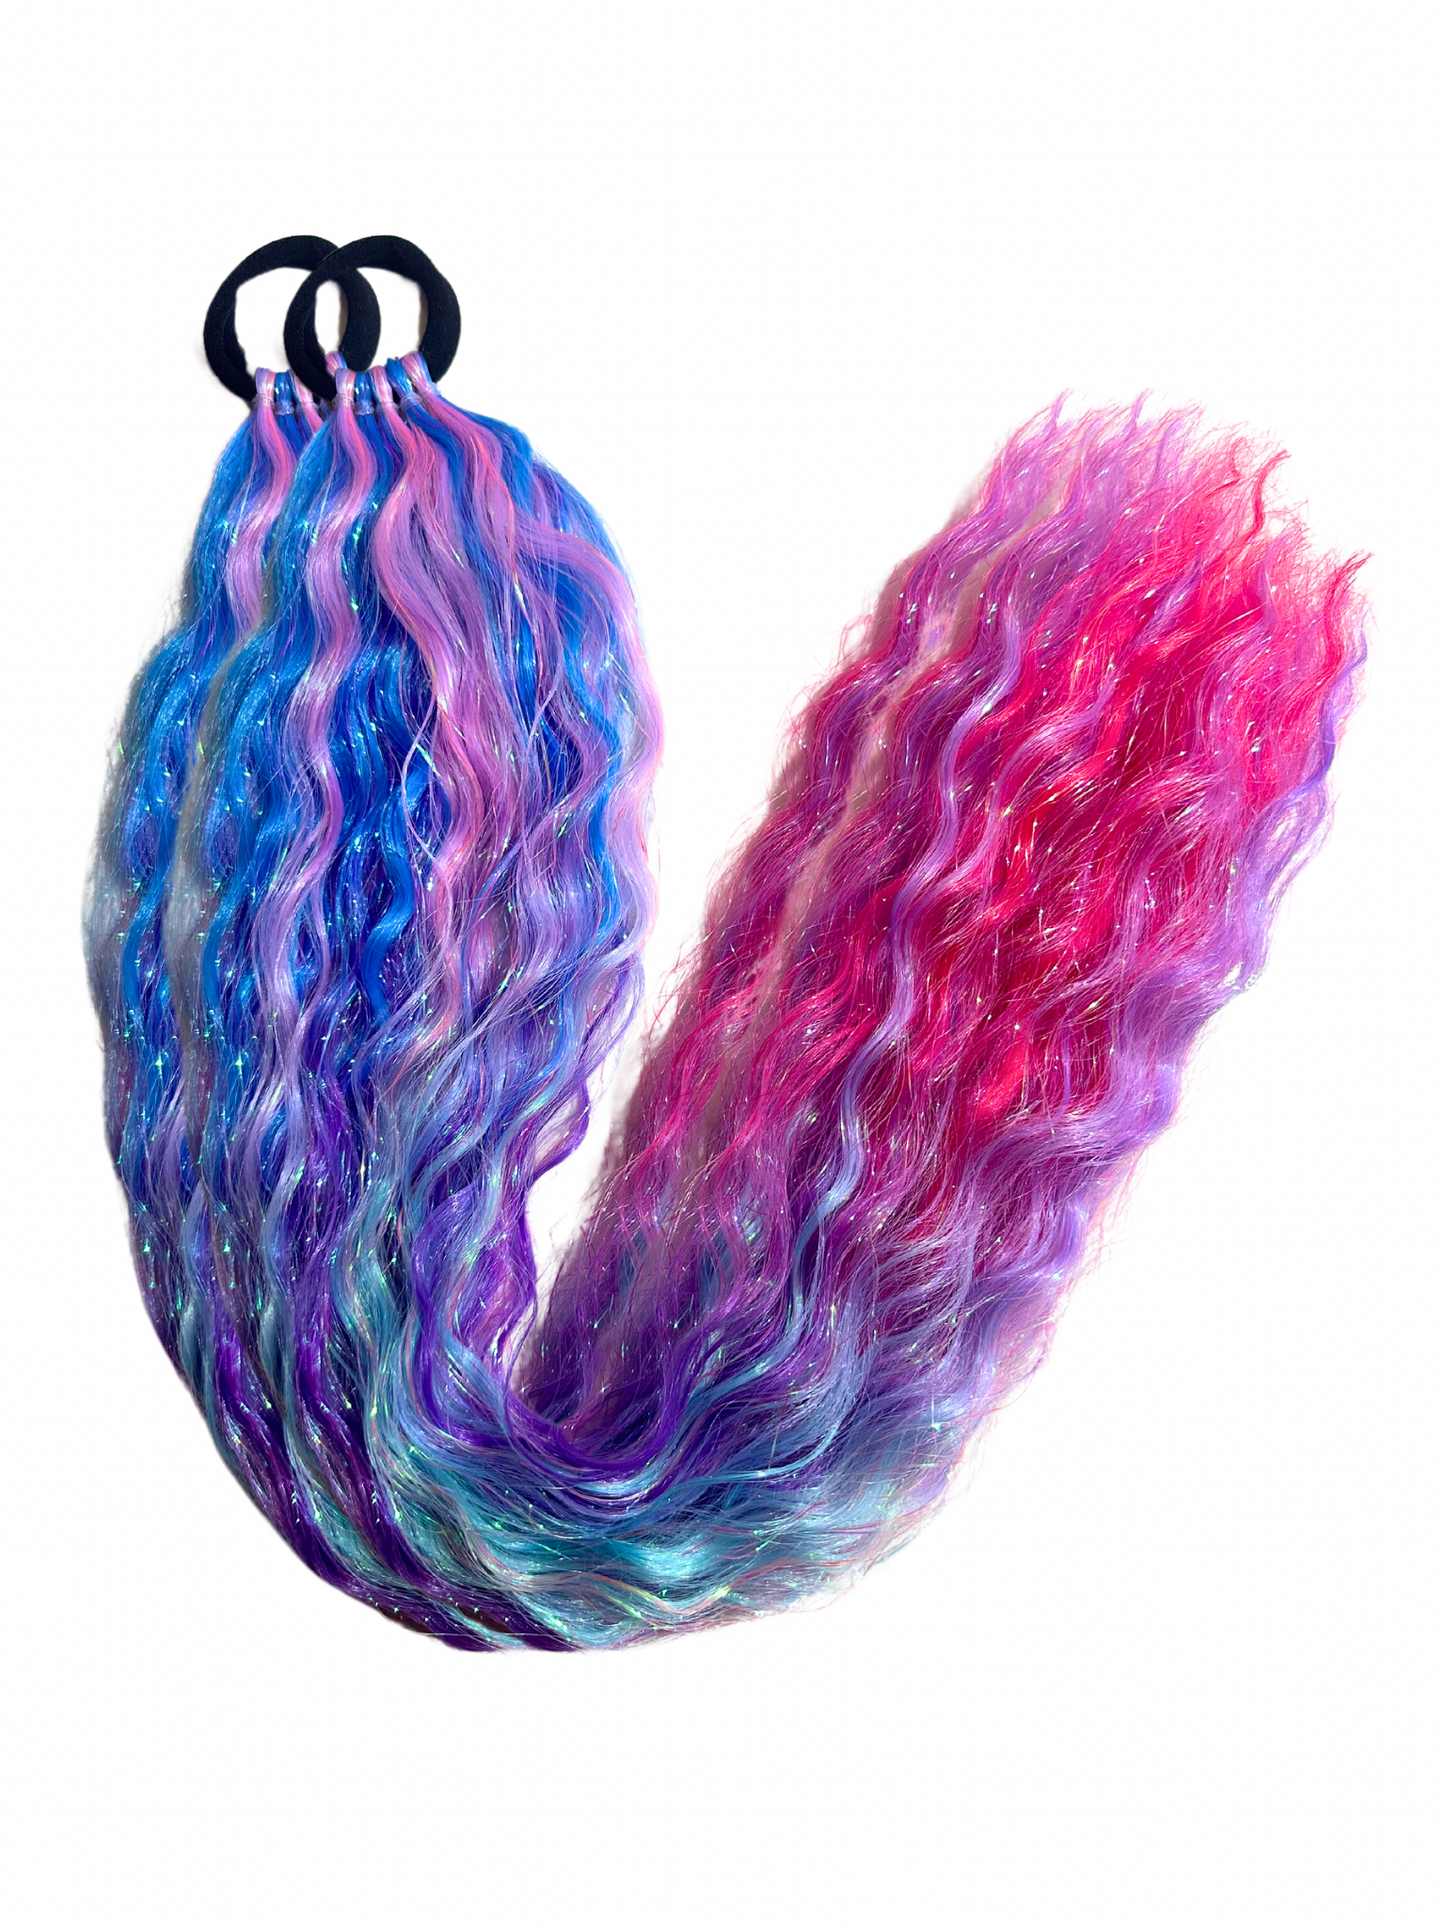 NEW Limited Edition Galaxy mermaid ponytail set